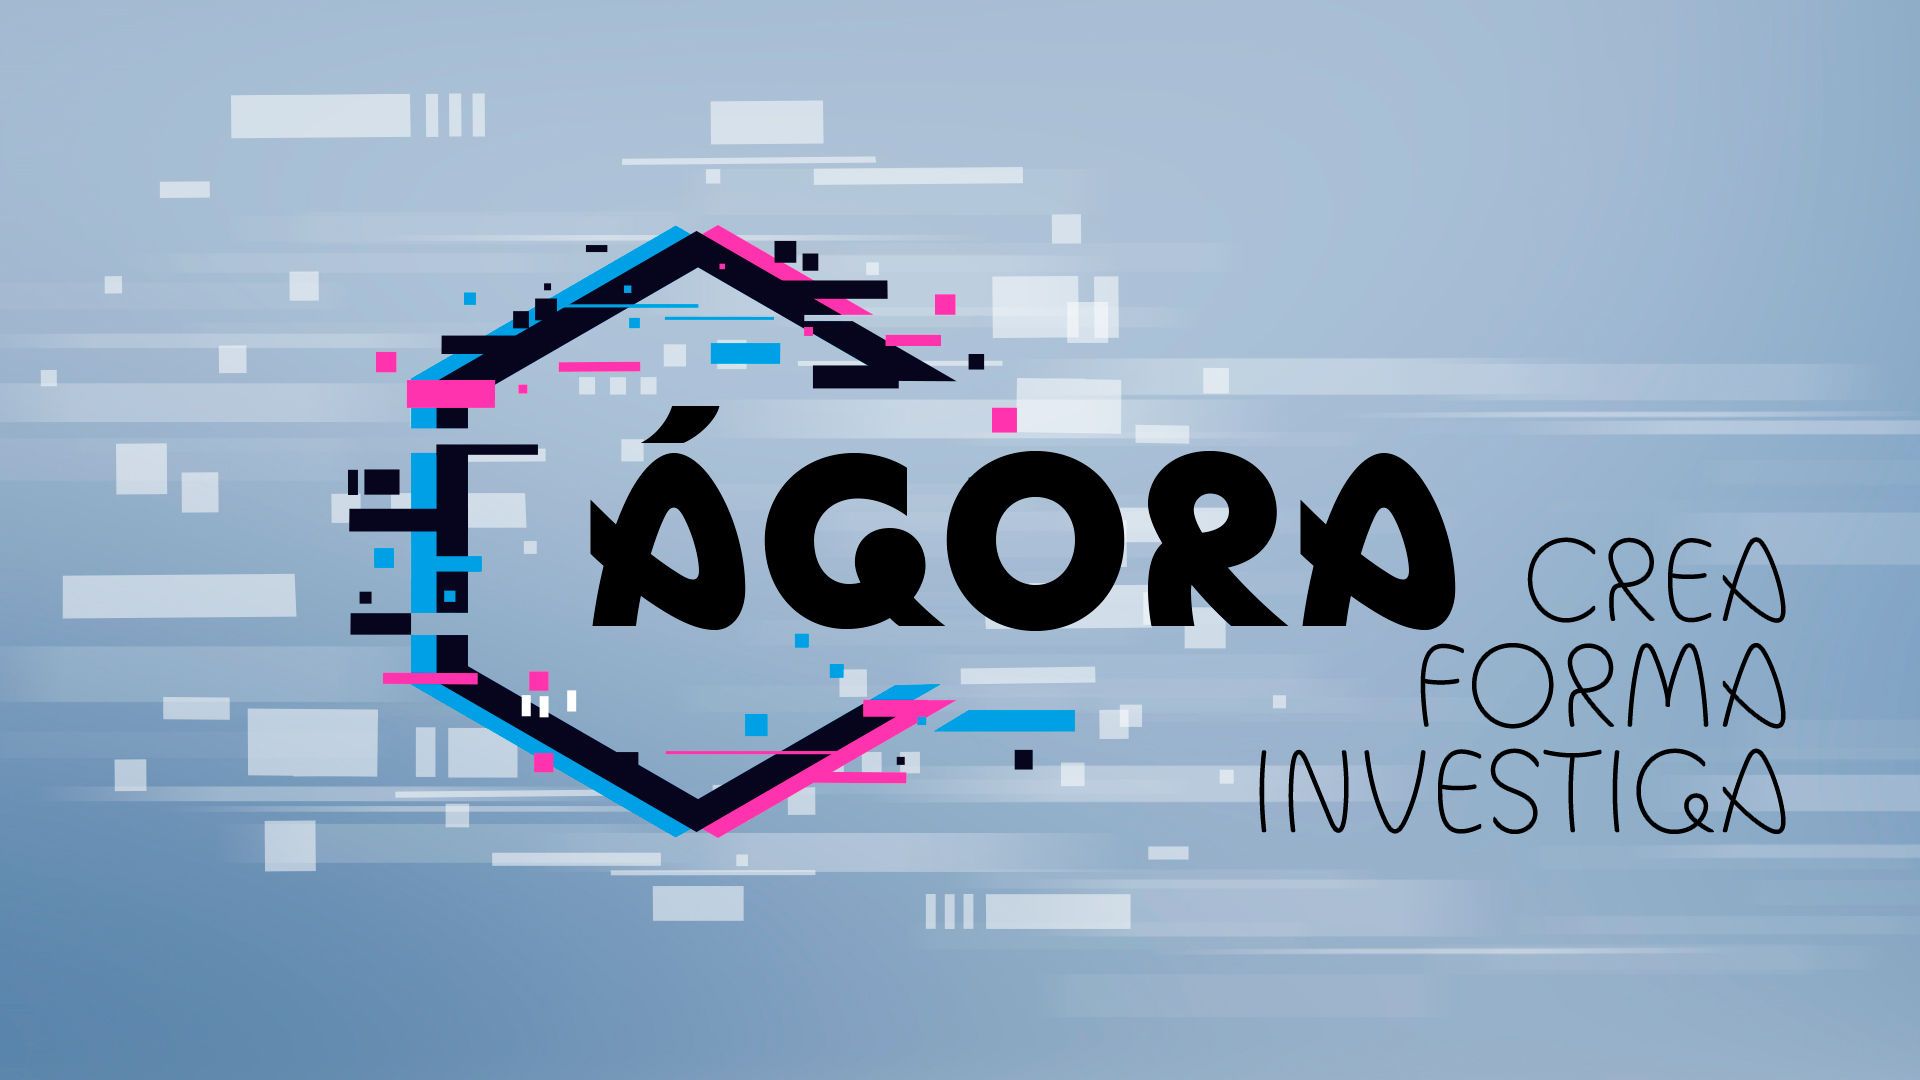 Logotipo del programa Ágora